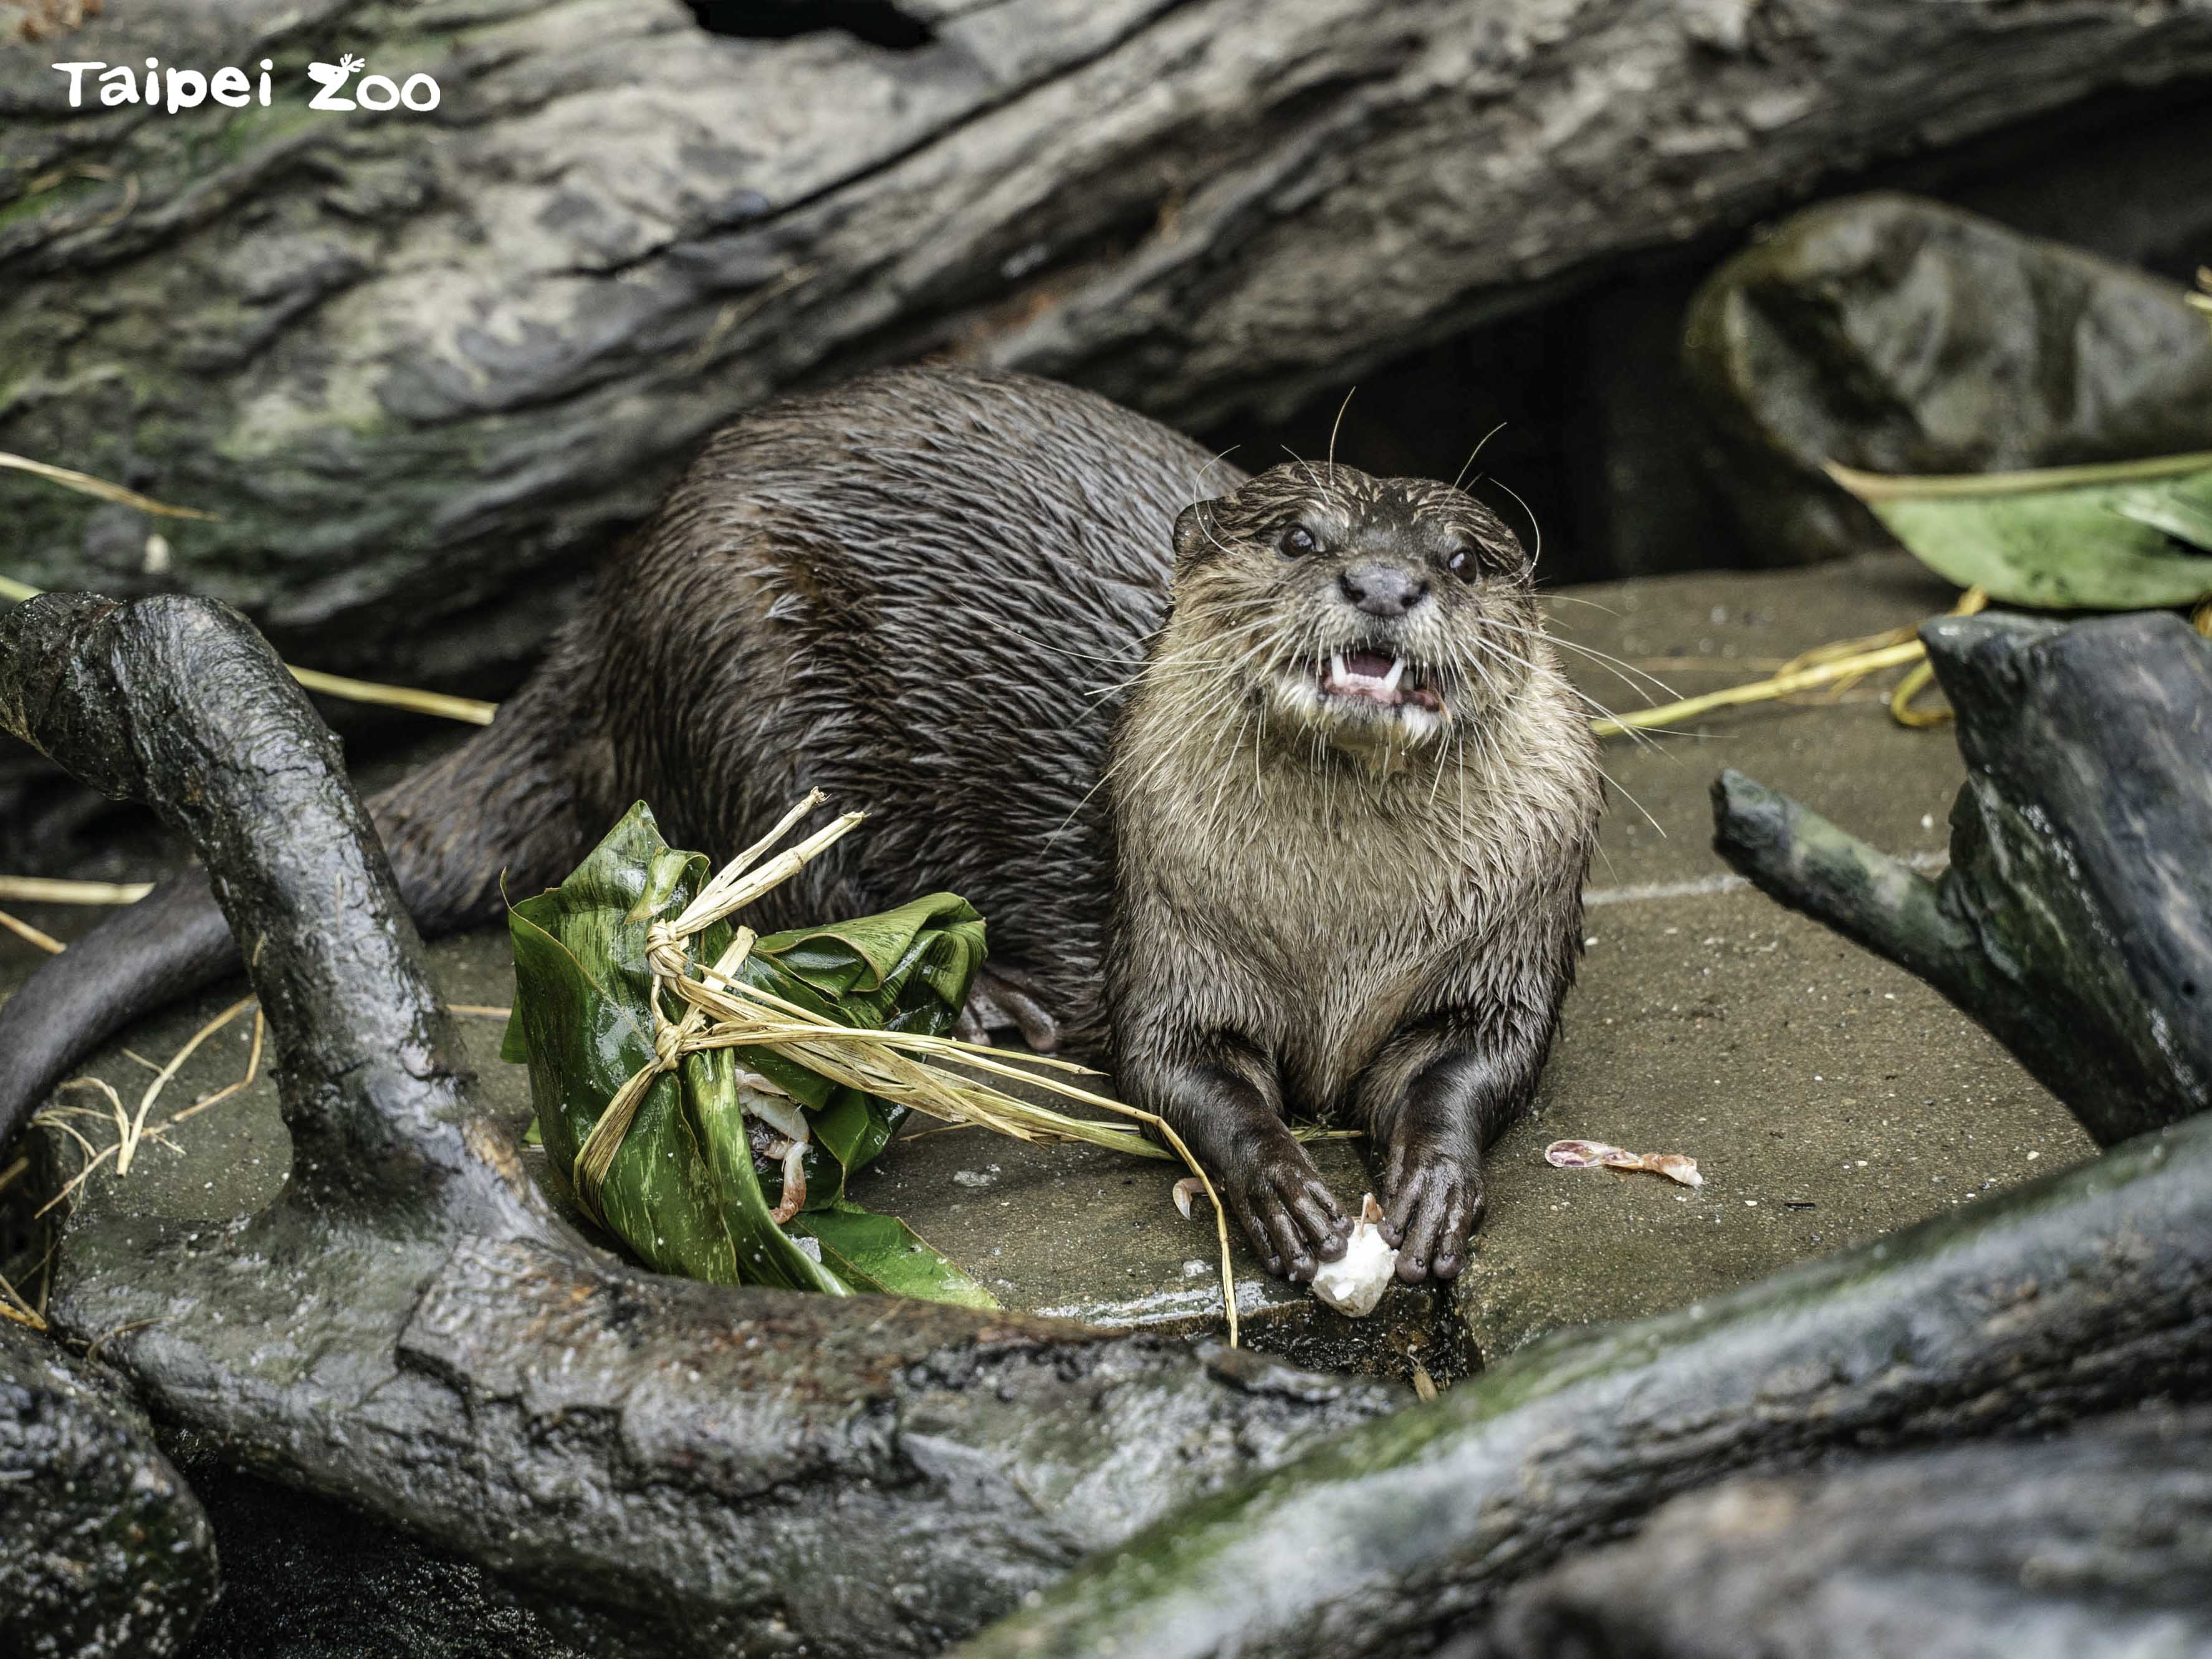 An otter enjoys the ice zongzi.